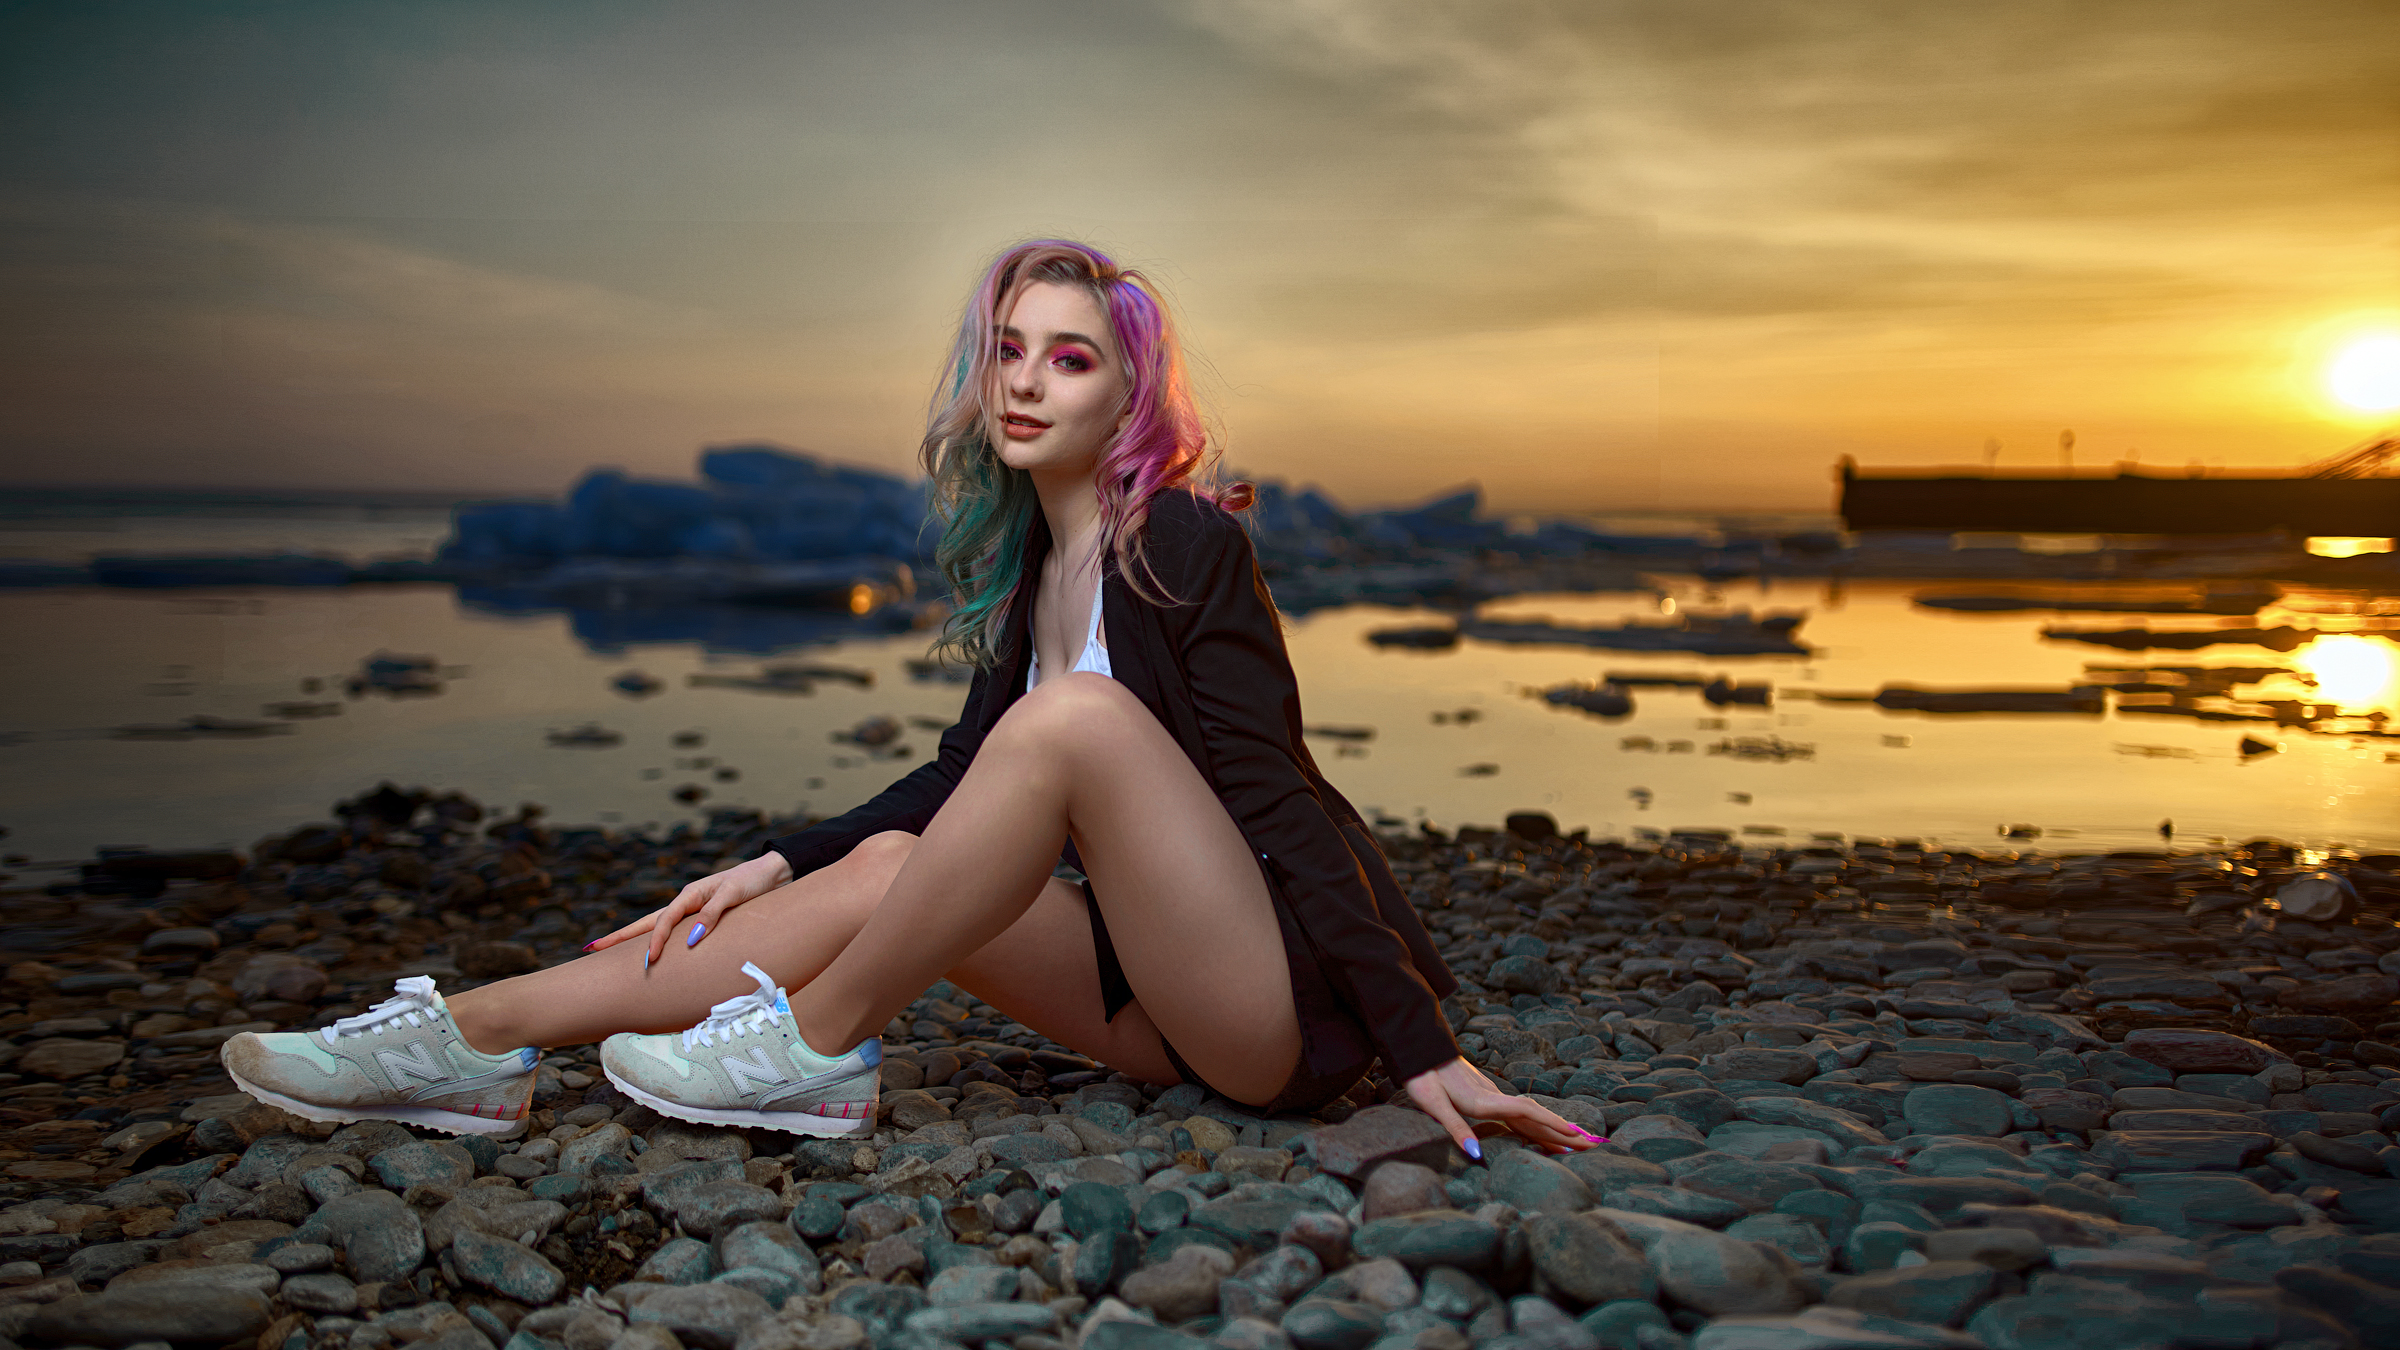 Vyacheslav Tsurkan Women Dyed Hair Colorful Pink Jacket Shorts Legs Sneakers Stones Sky Horizon Blue 2400x1350